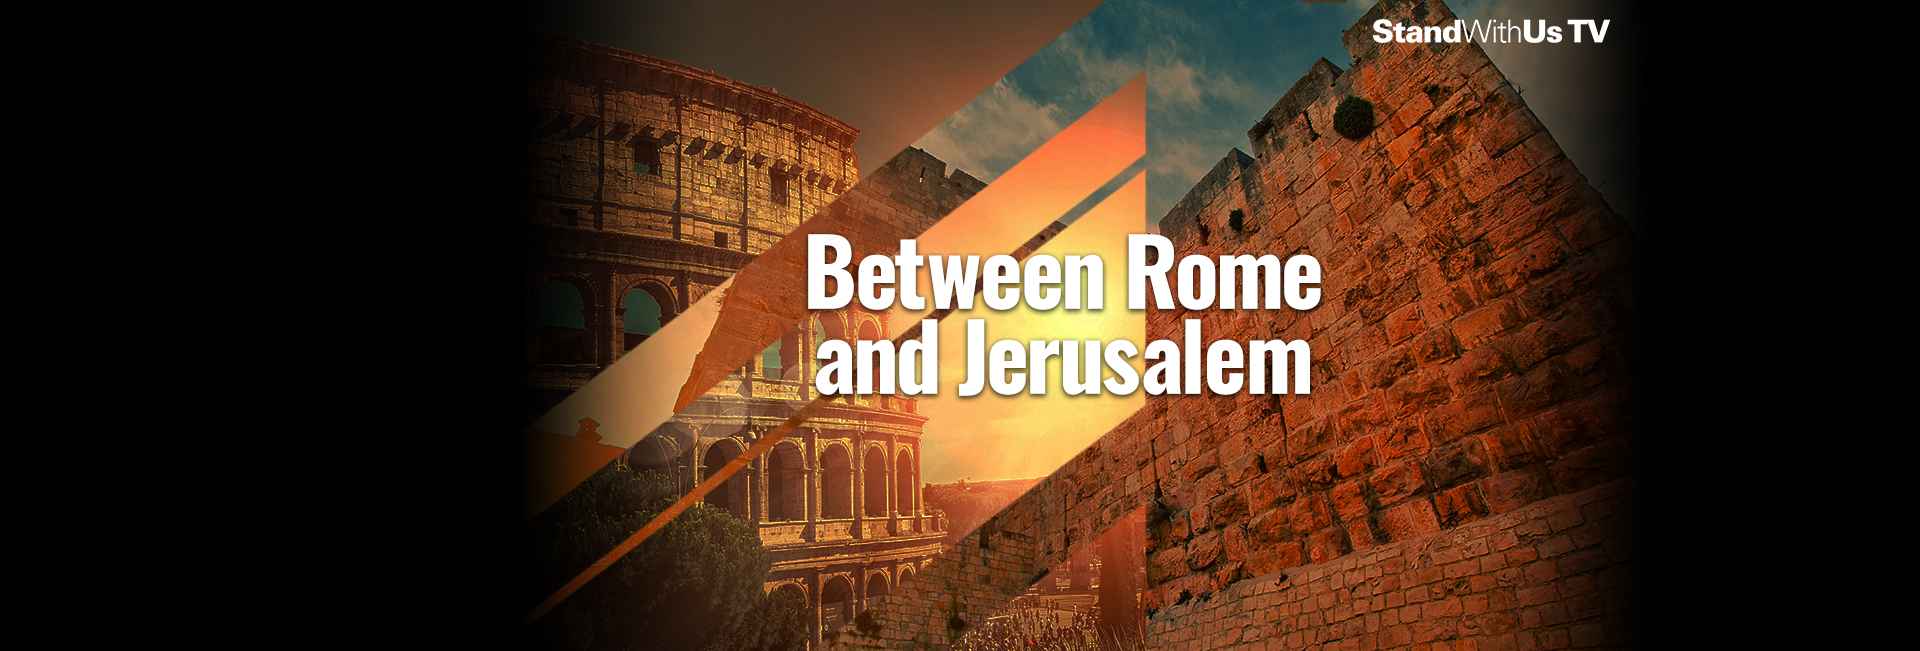 Between Rome and Jerusalem Episode 1: Origins of the Roman Jewish community